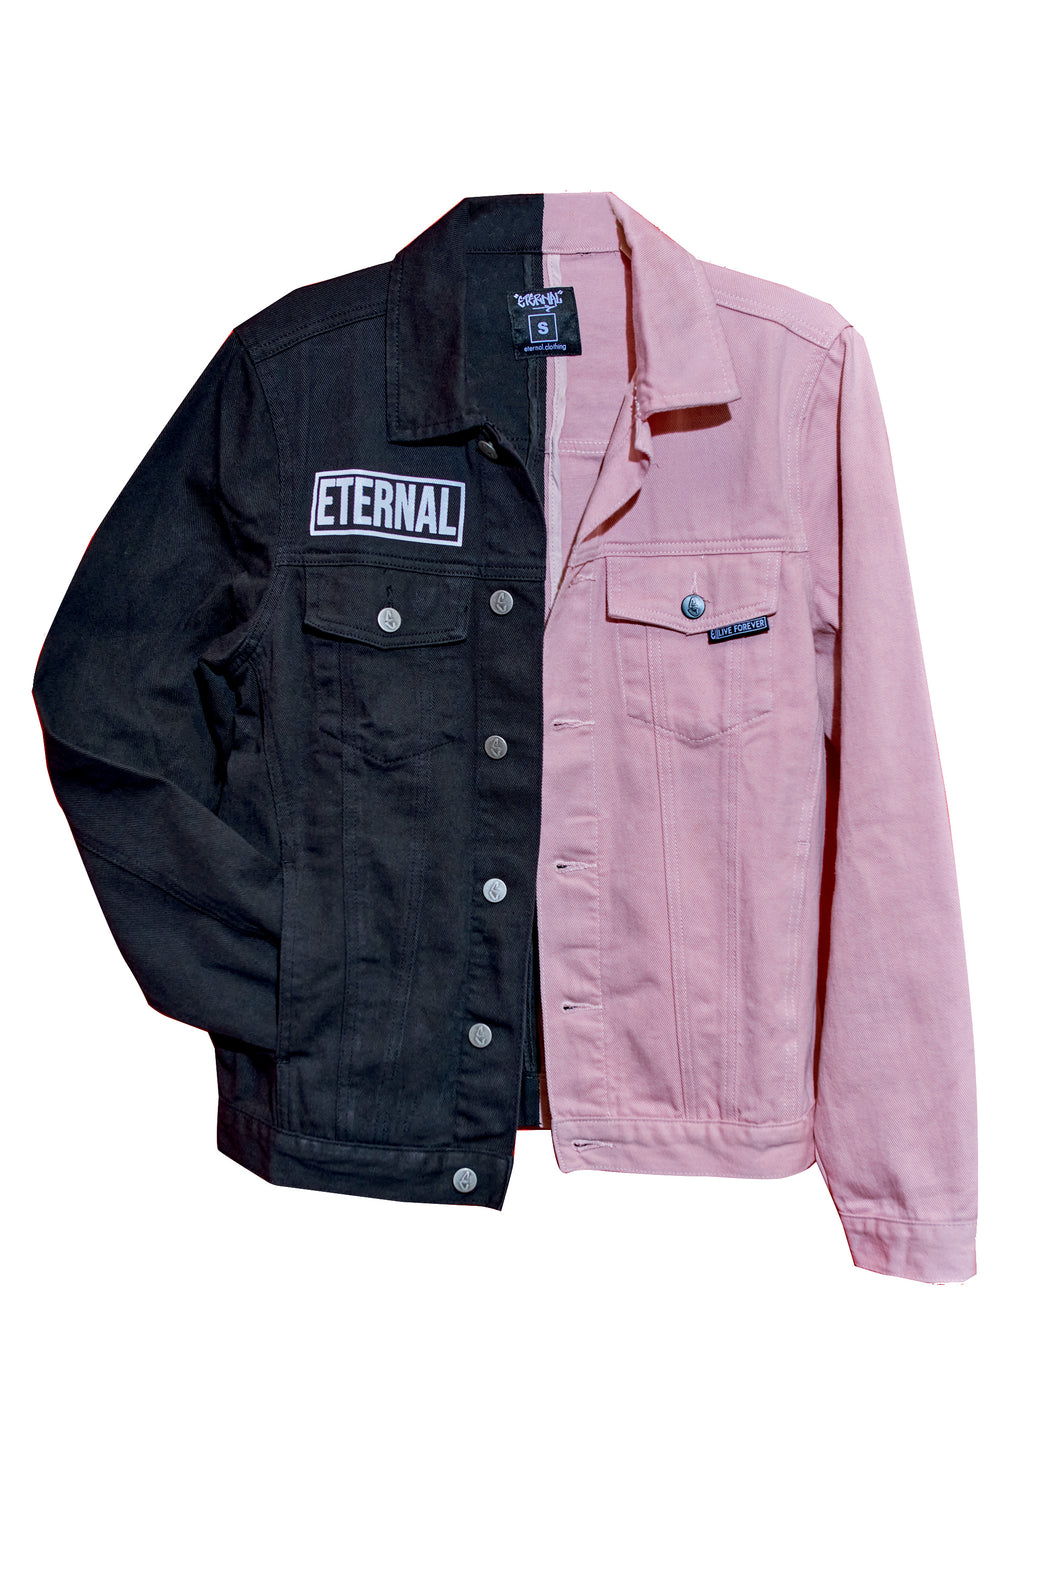 Eternal Pink/Black Split Denim – Eternal Clothing